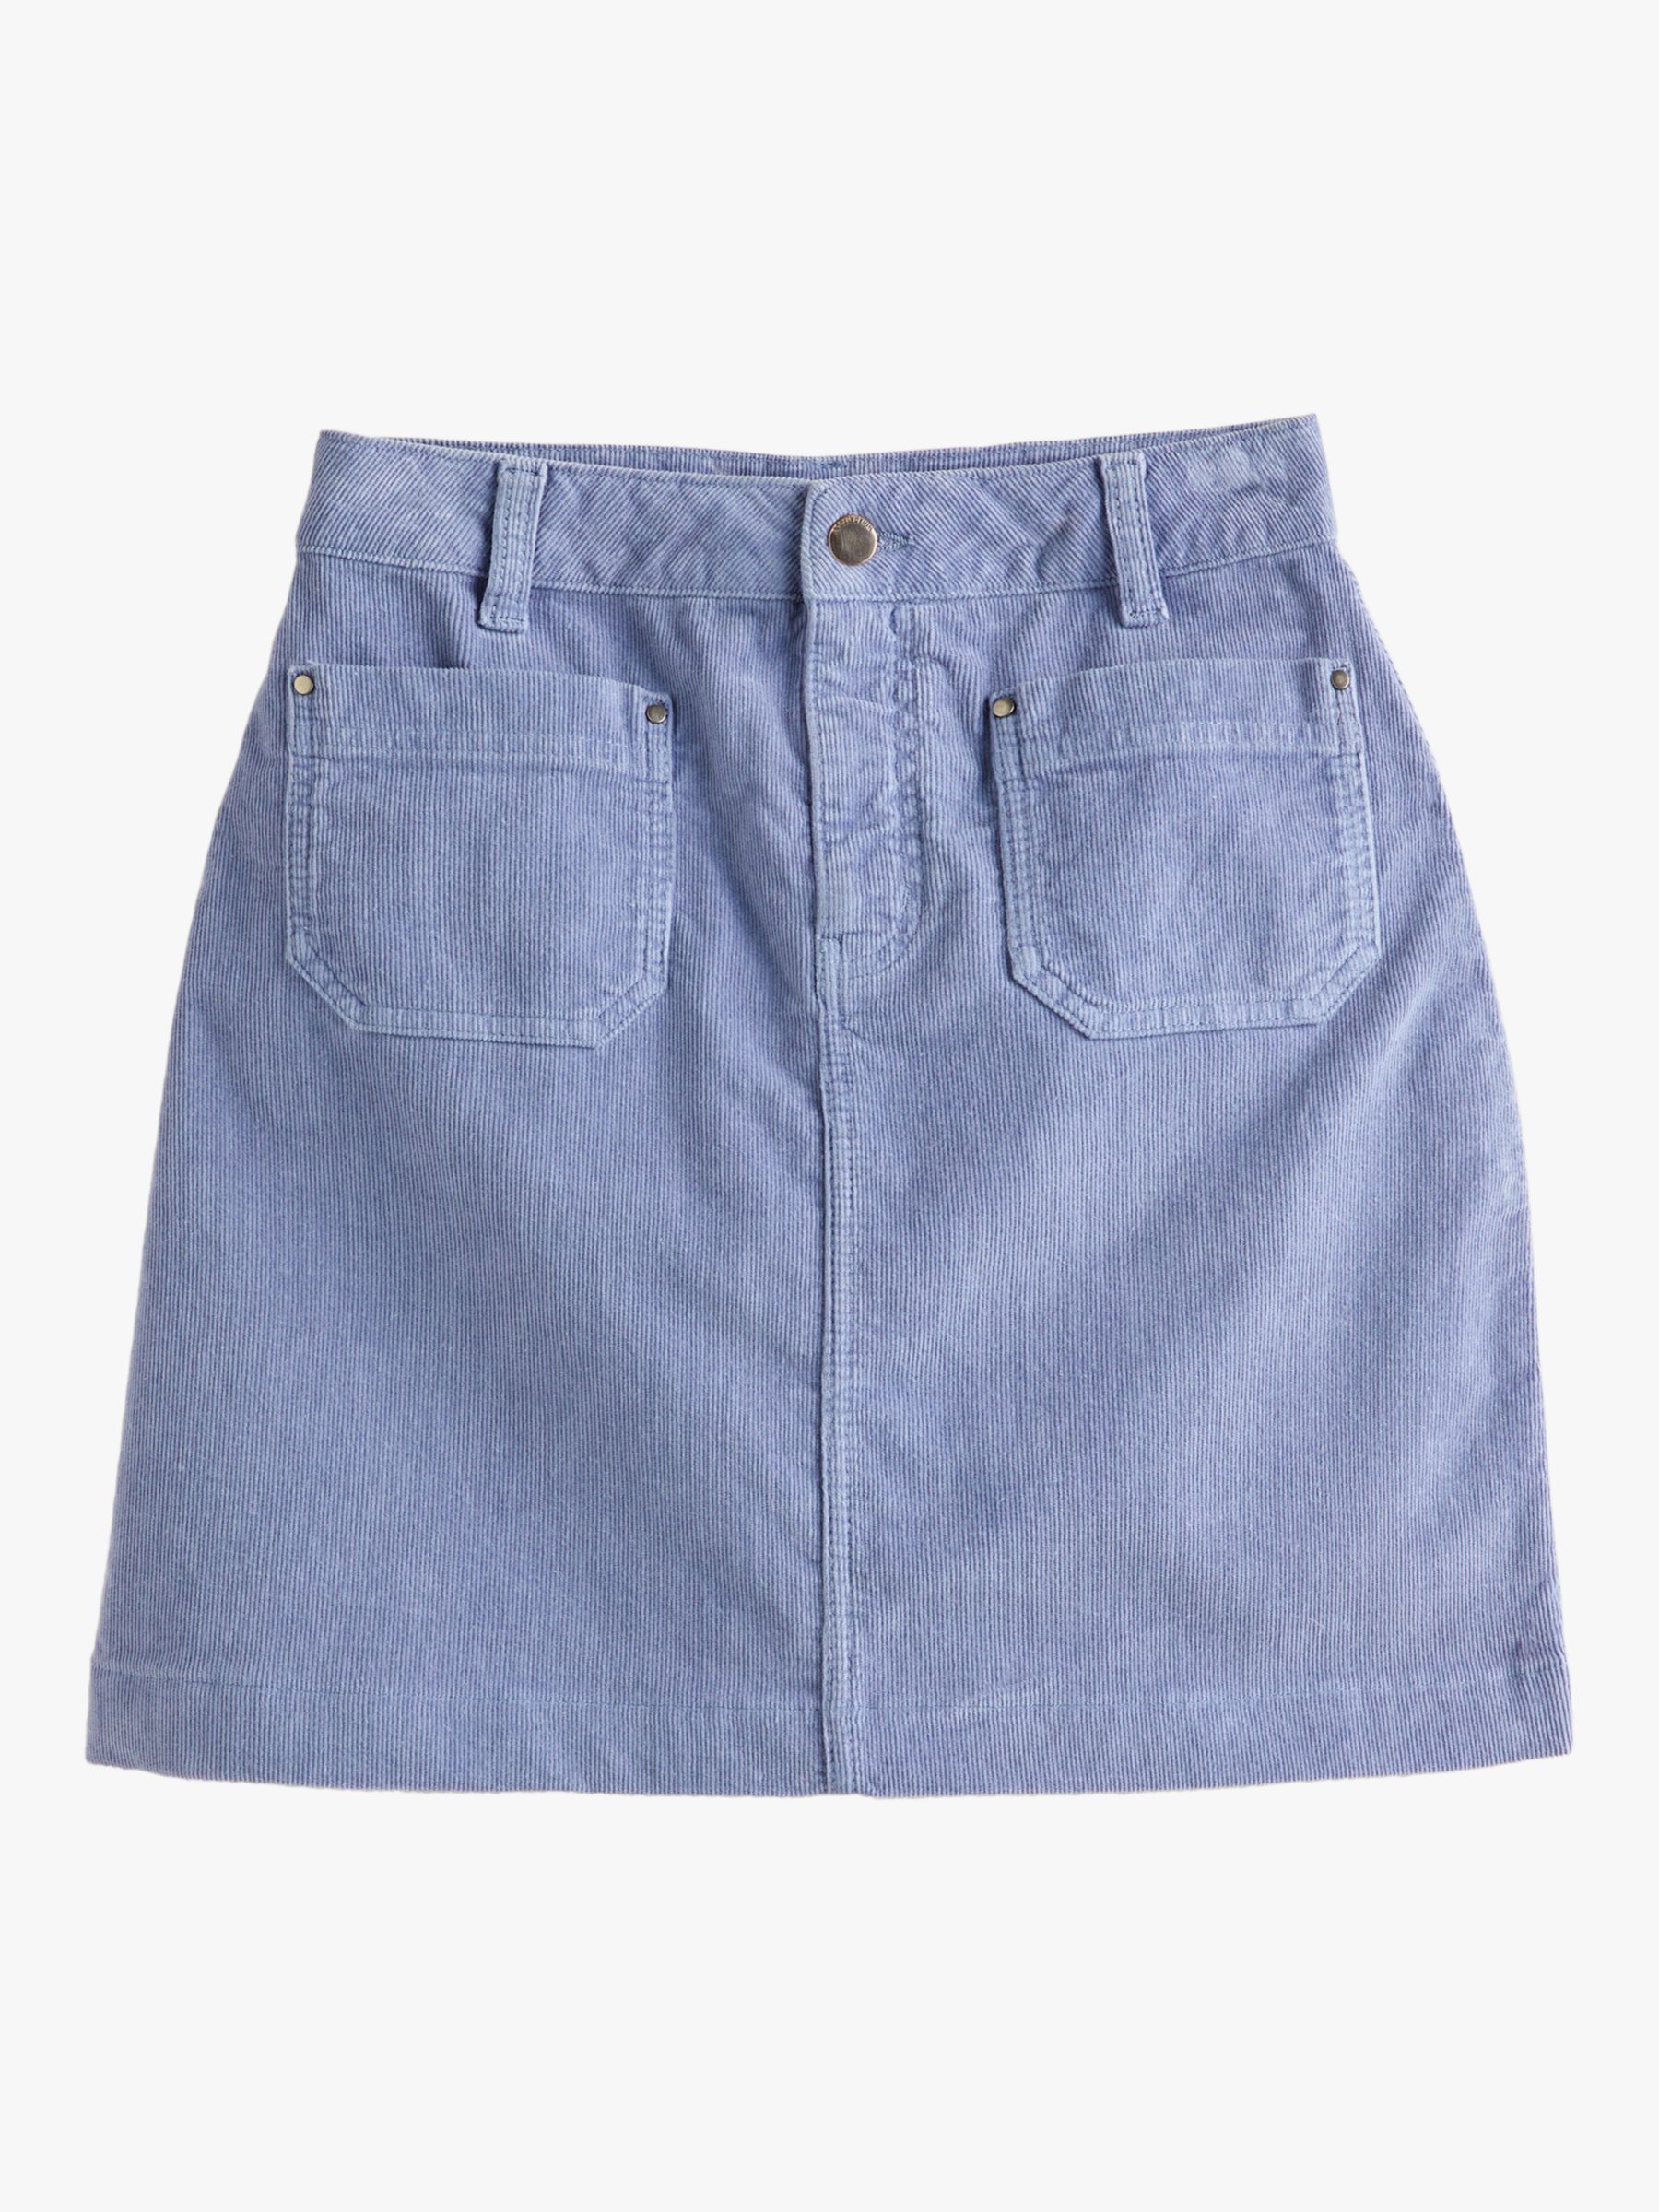 Boden Corduroy Mini Skirt, Mid Blue at John Lewis & Partners